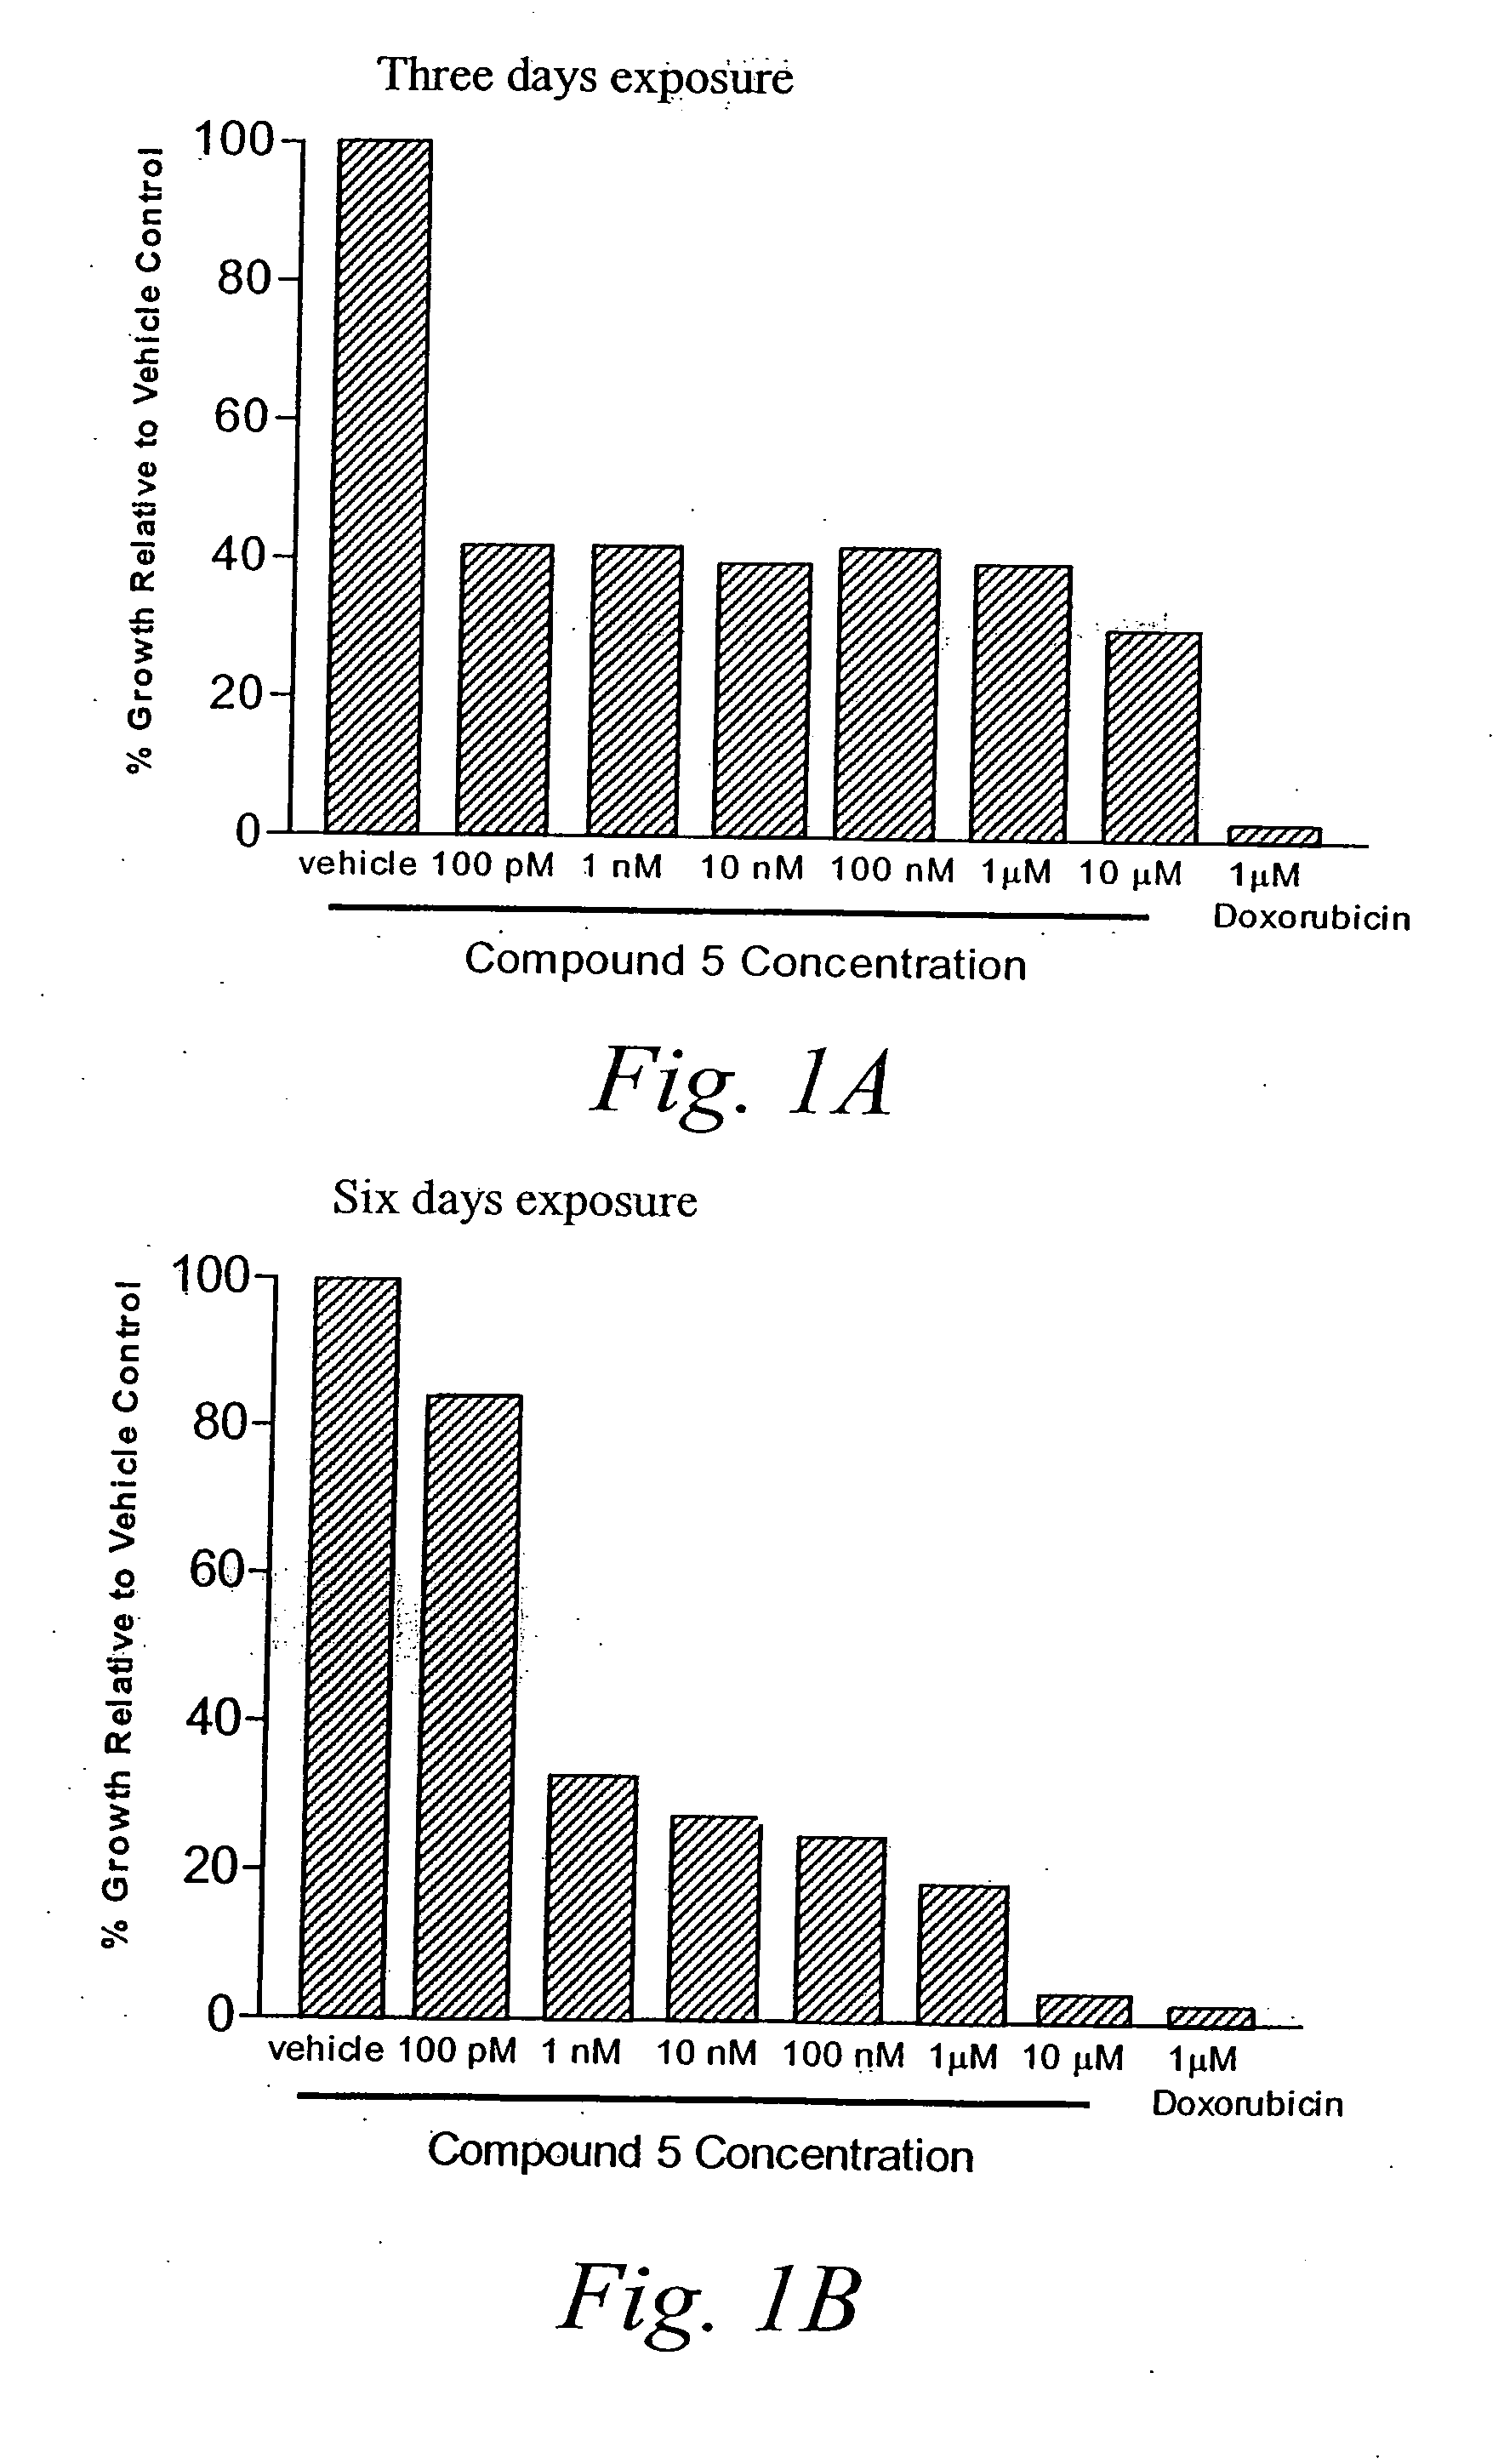 Methionine aminopeptidase-2 inhibitors and methods of use thereof